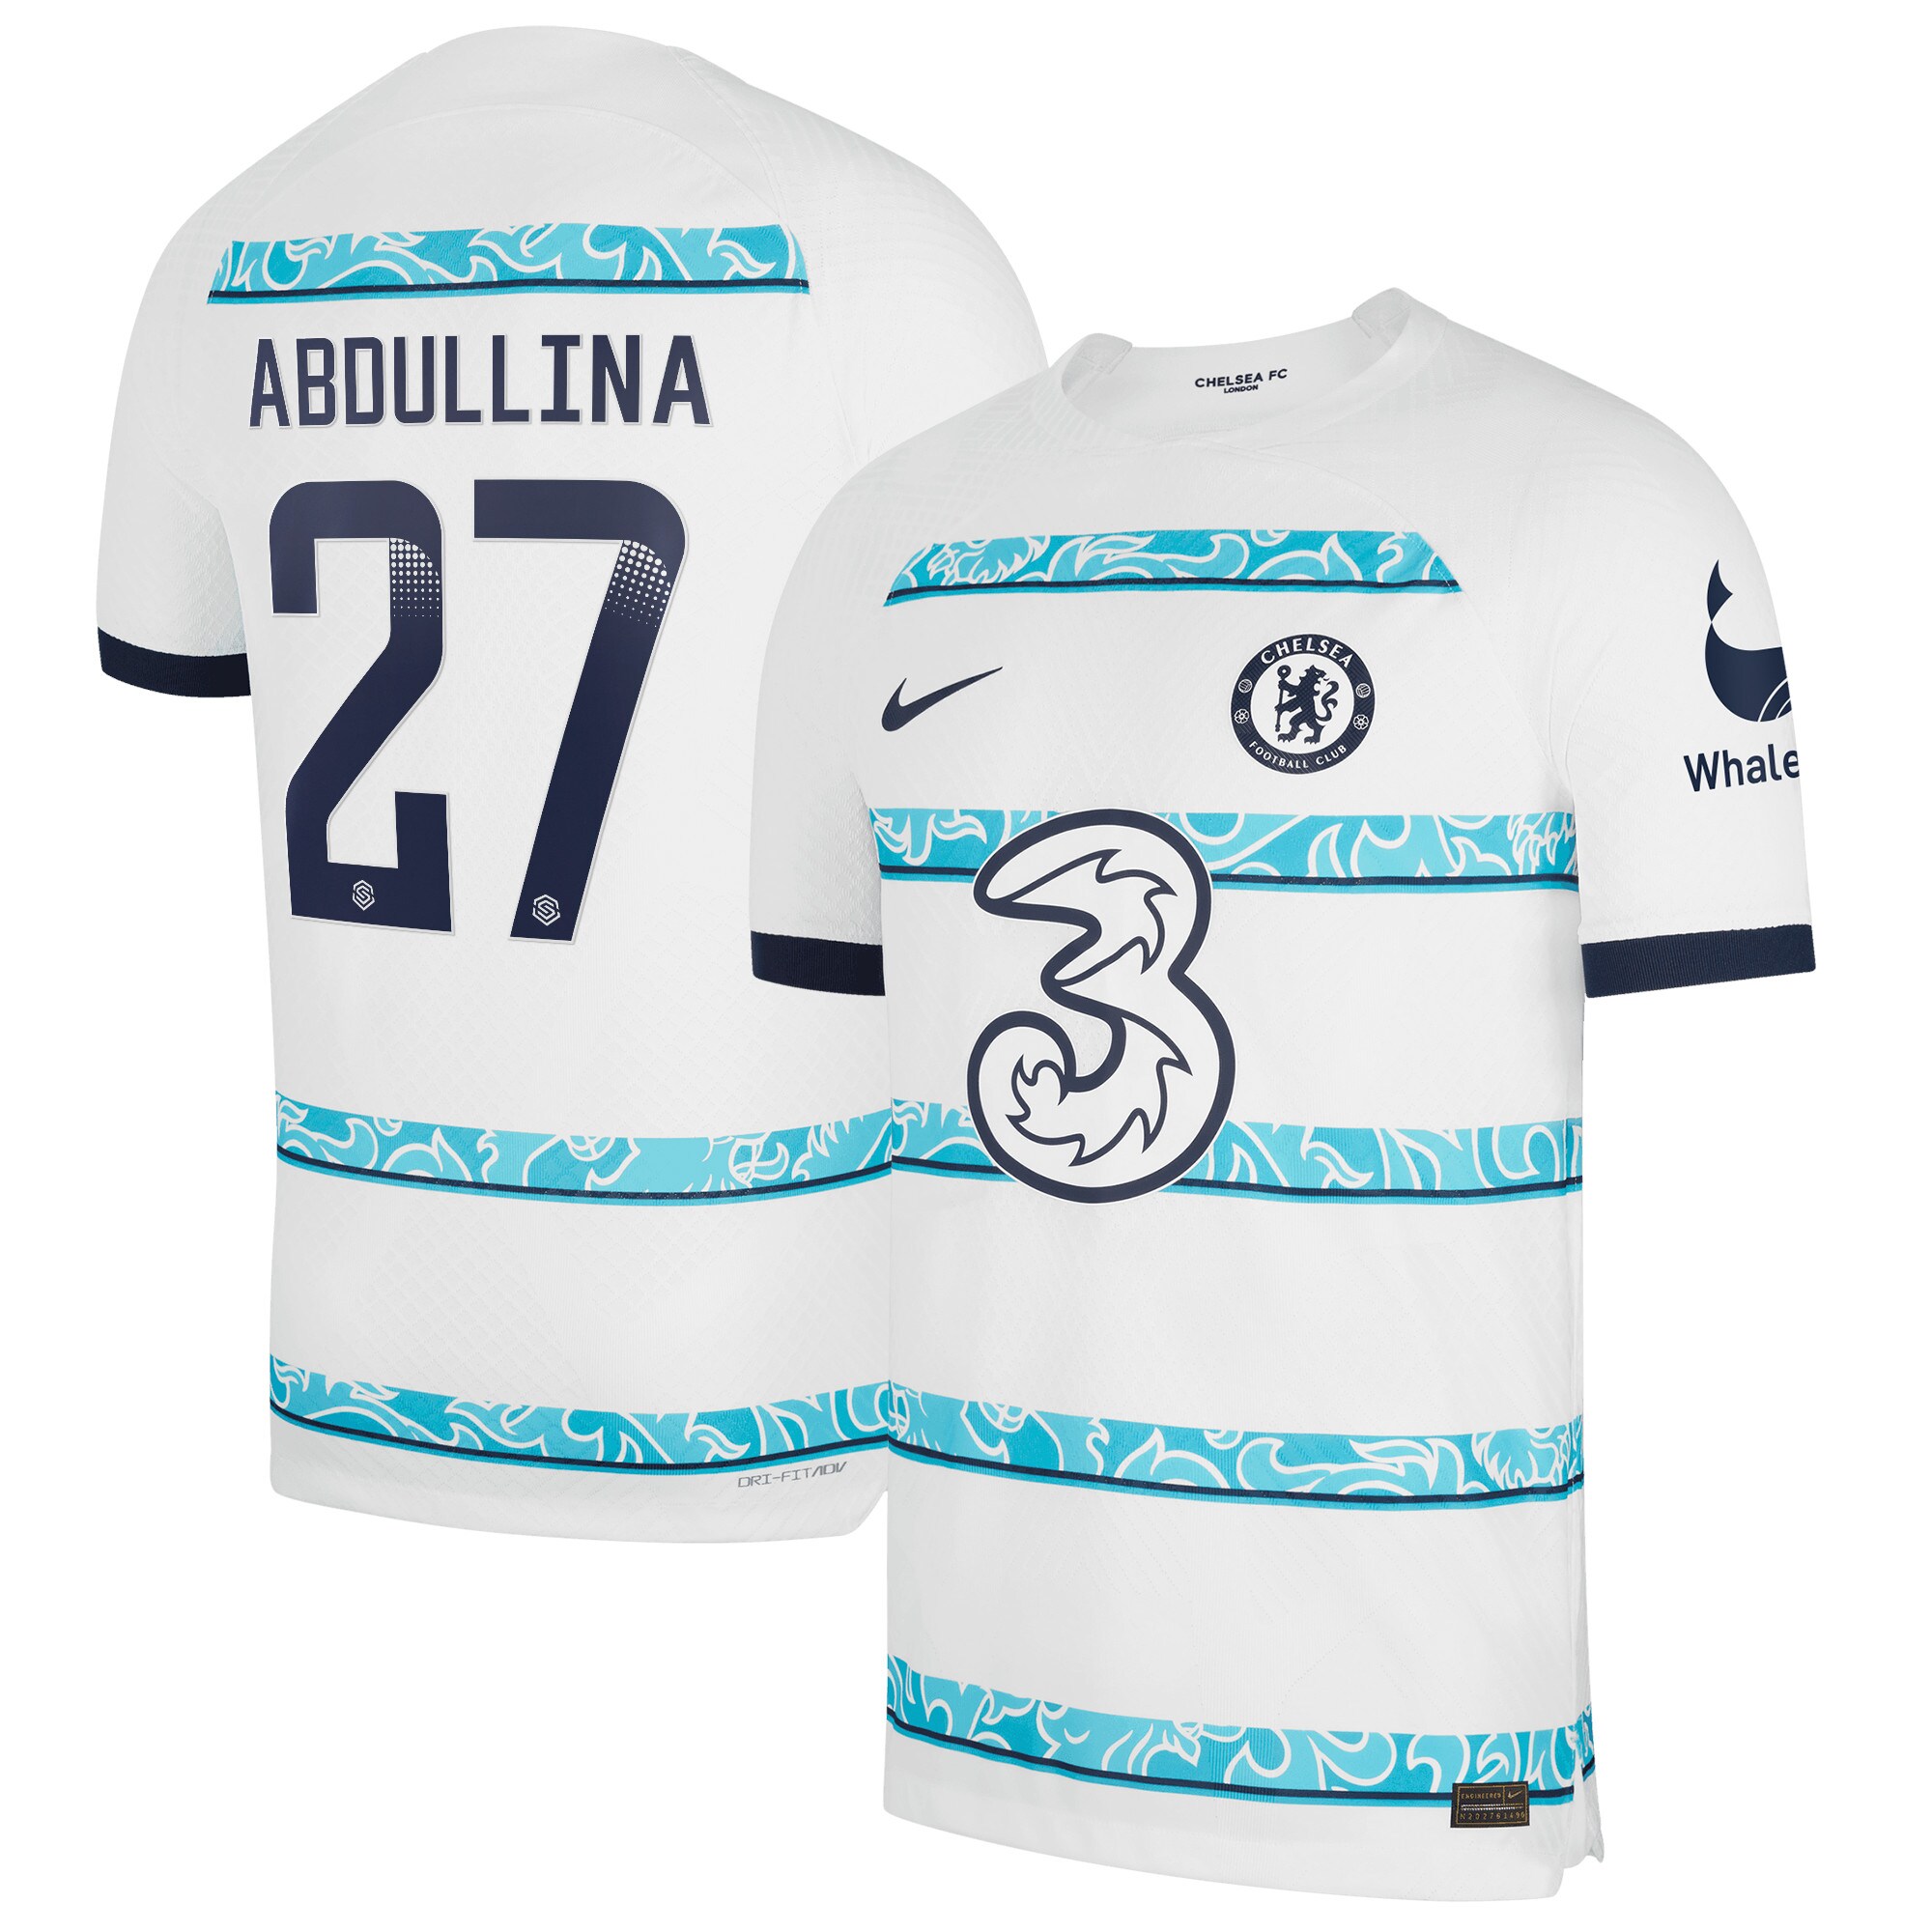 Chelsea WSL Away Vapor Match Shirt 2022-23 with Abdullina 27 printing